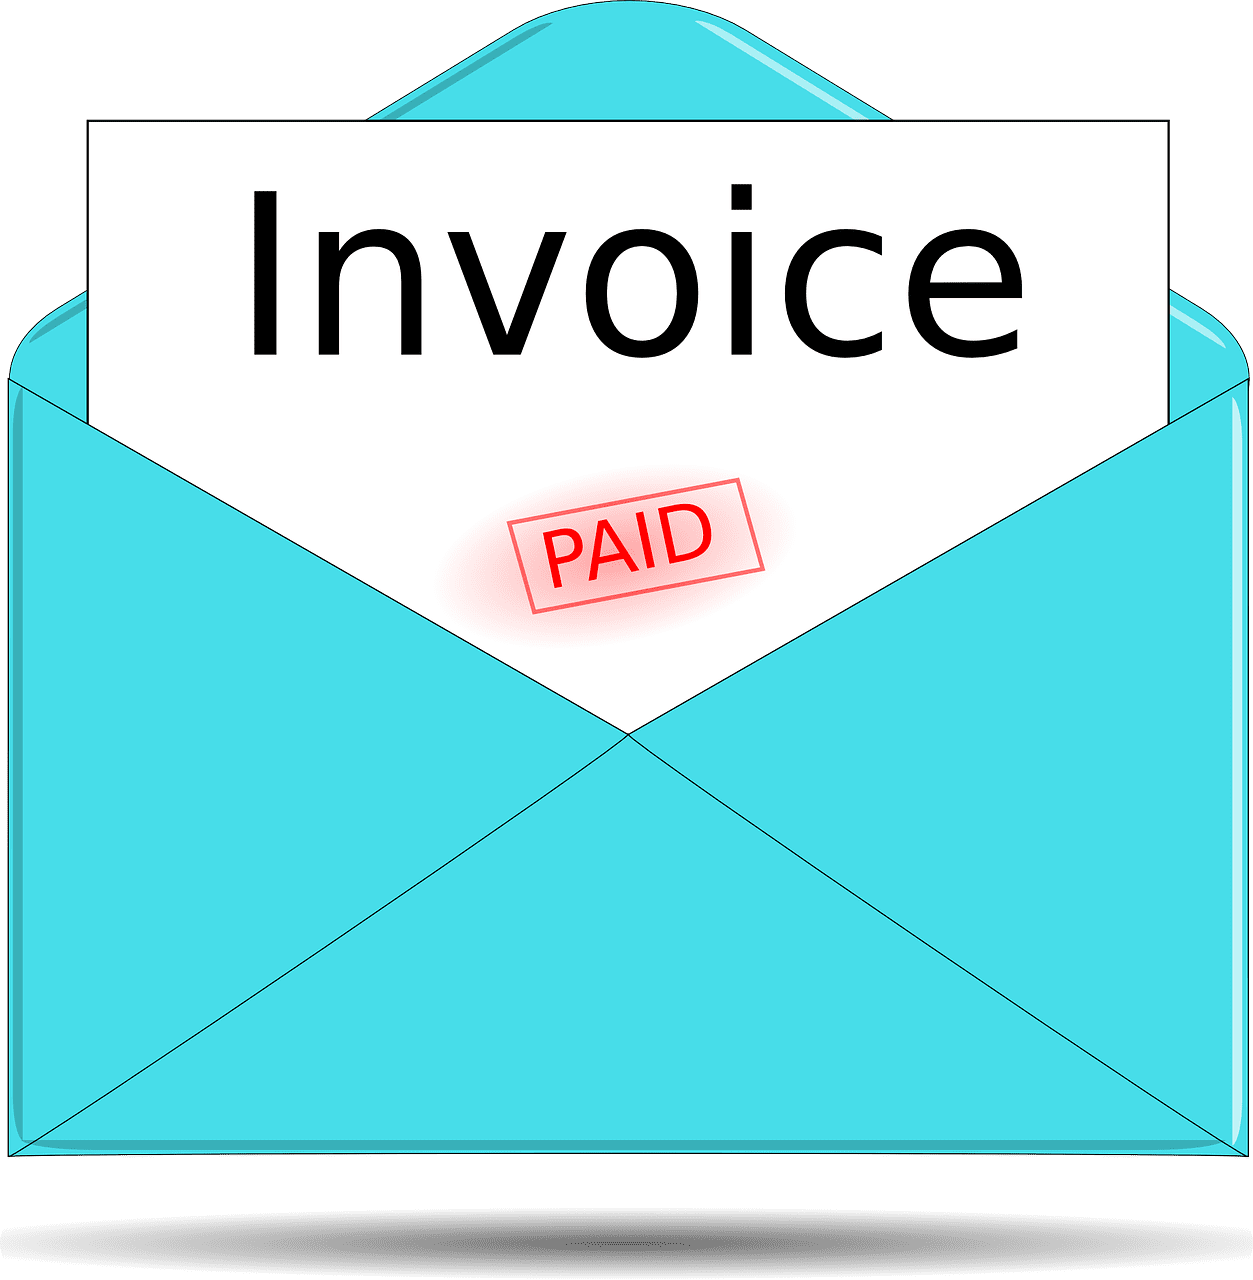 Invoice Paid